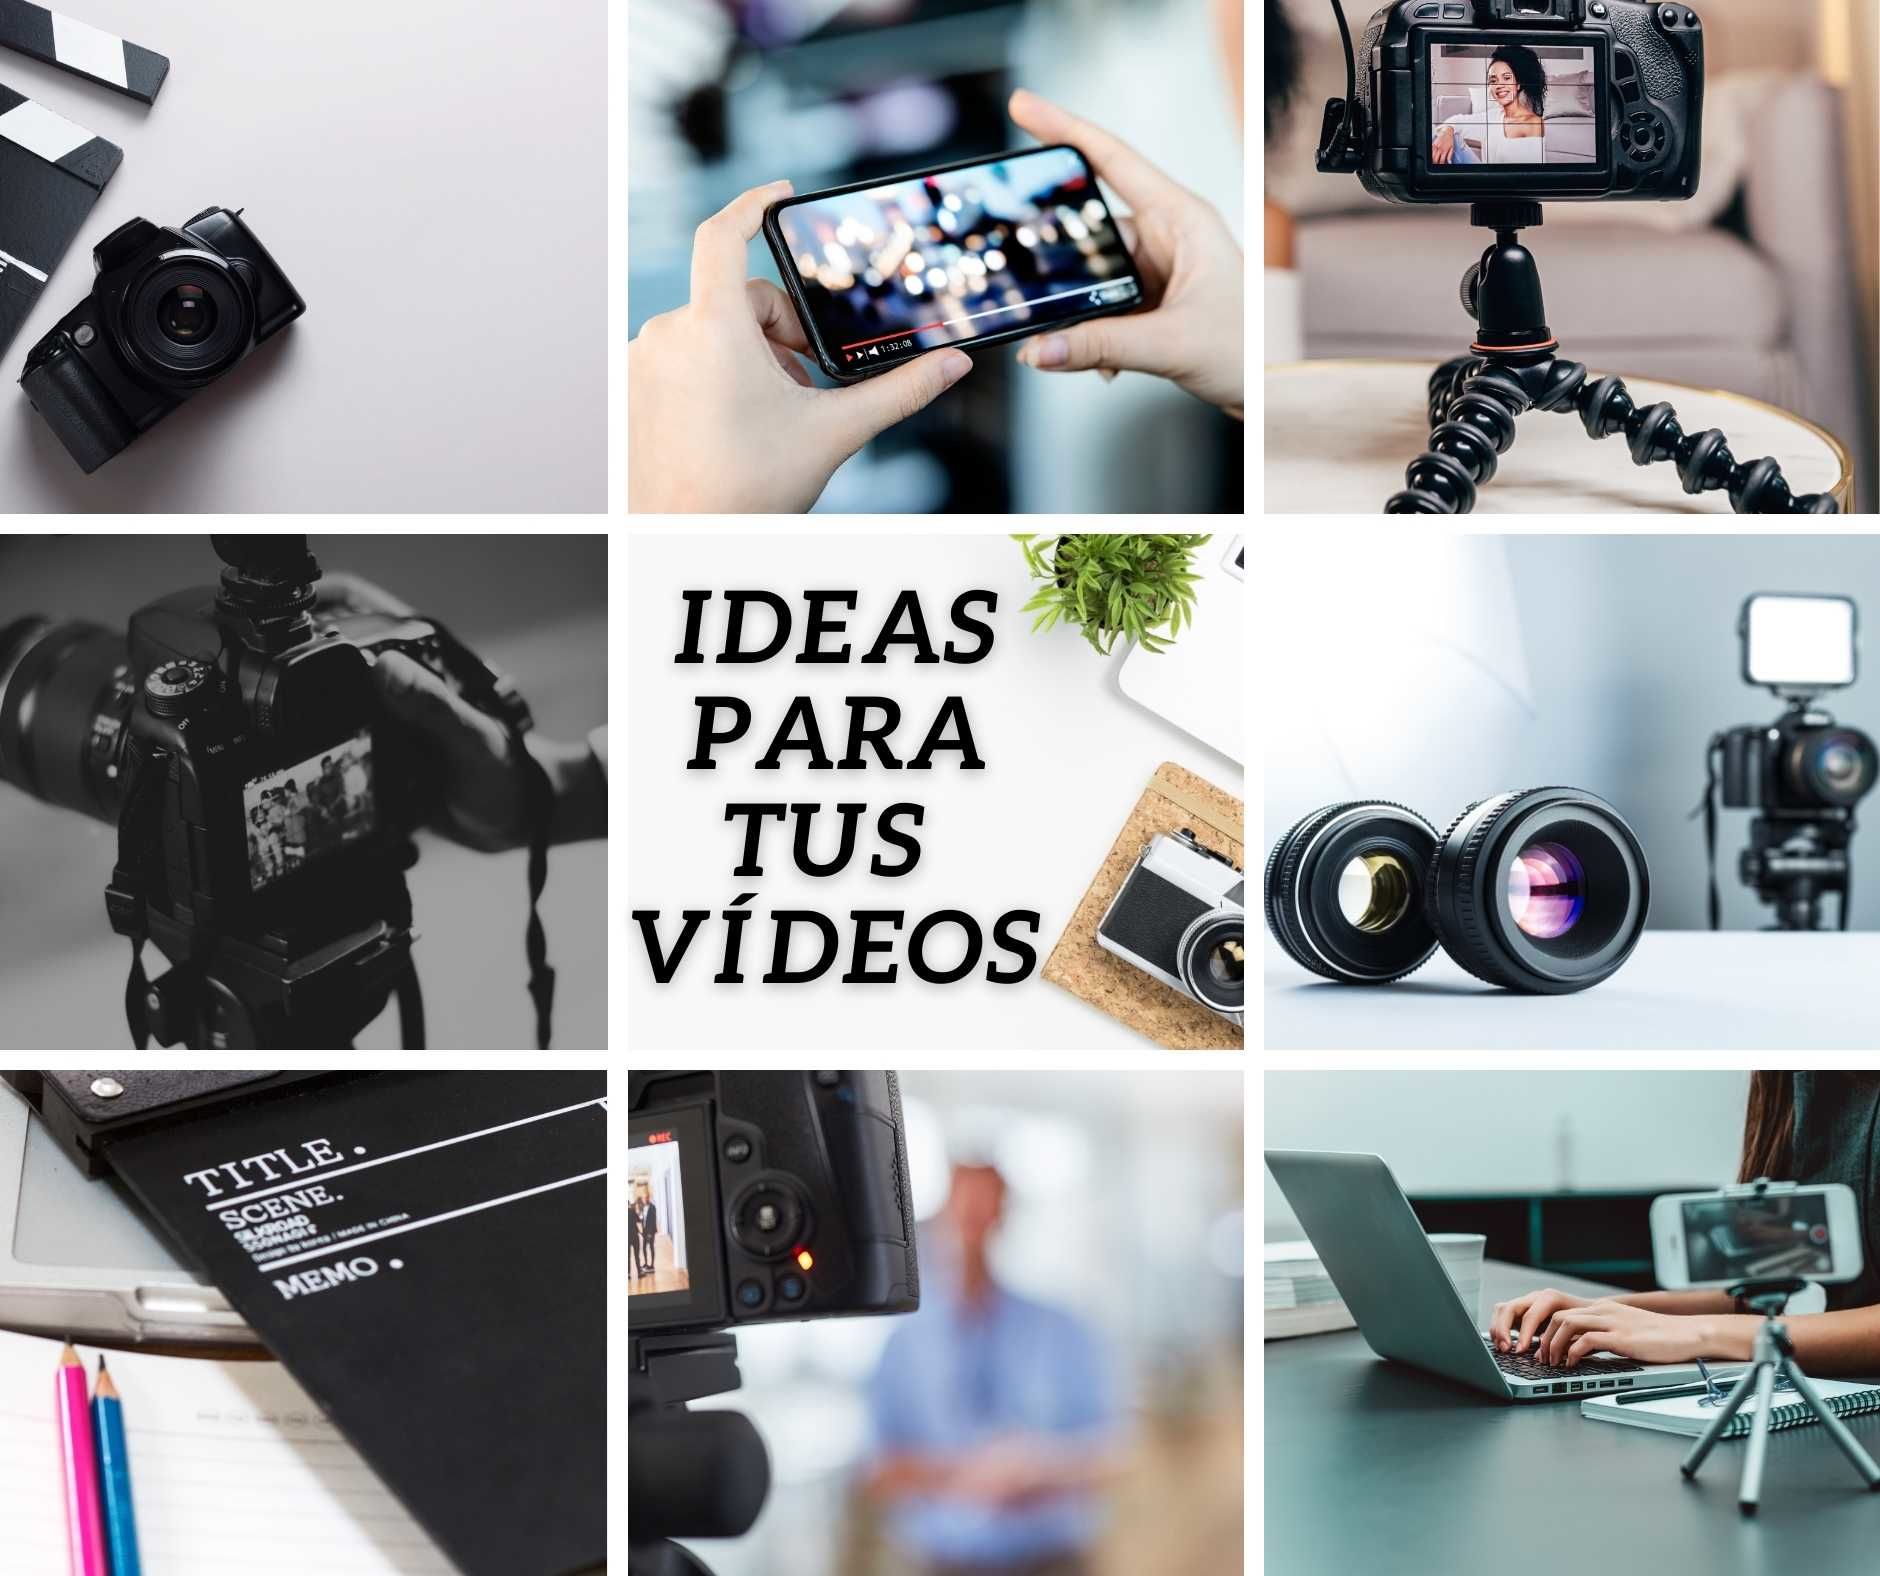 FBR Fotografía y Vídeo - ideas-para-tus-videos-videomarketing.jpg